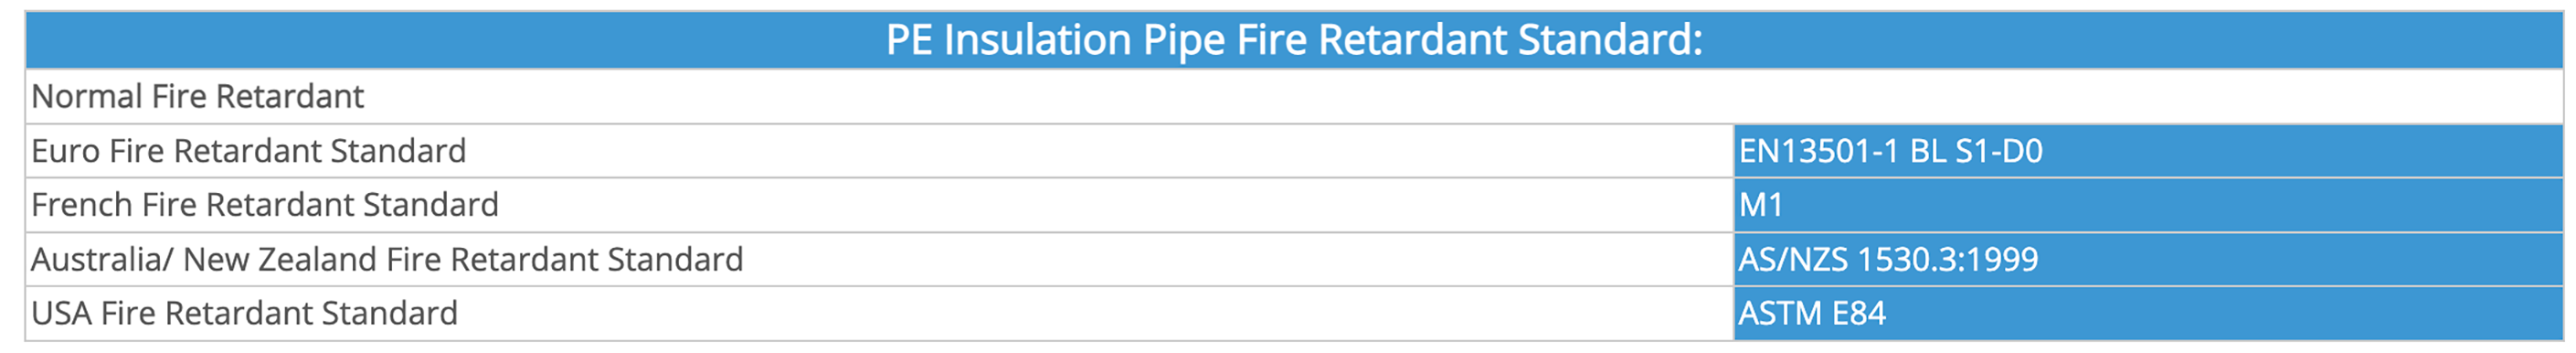 Fire retardant standard